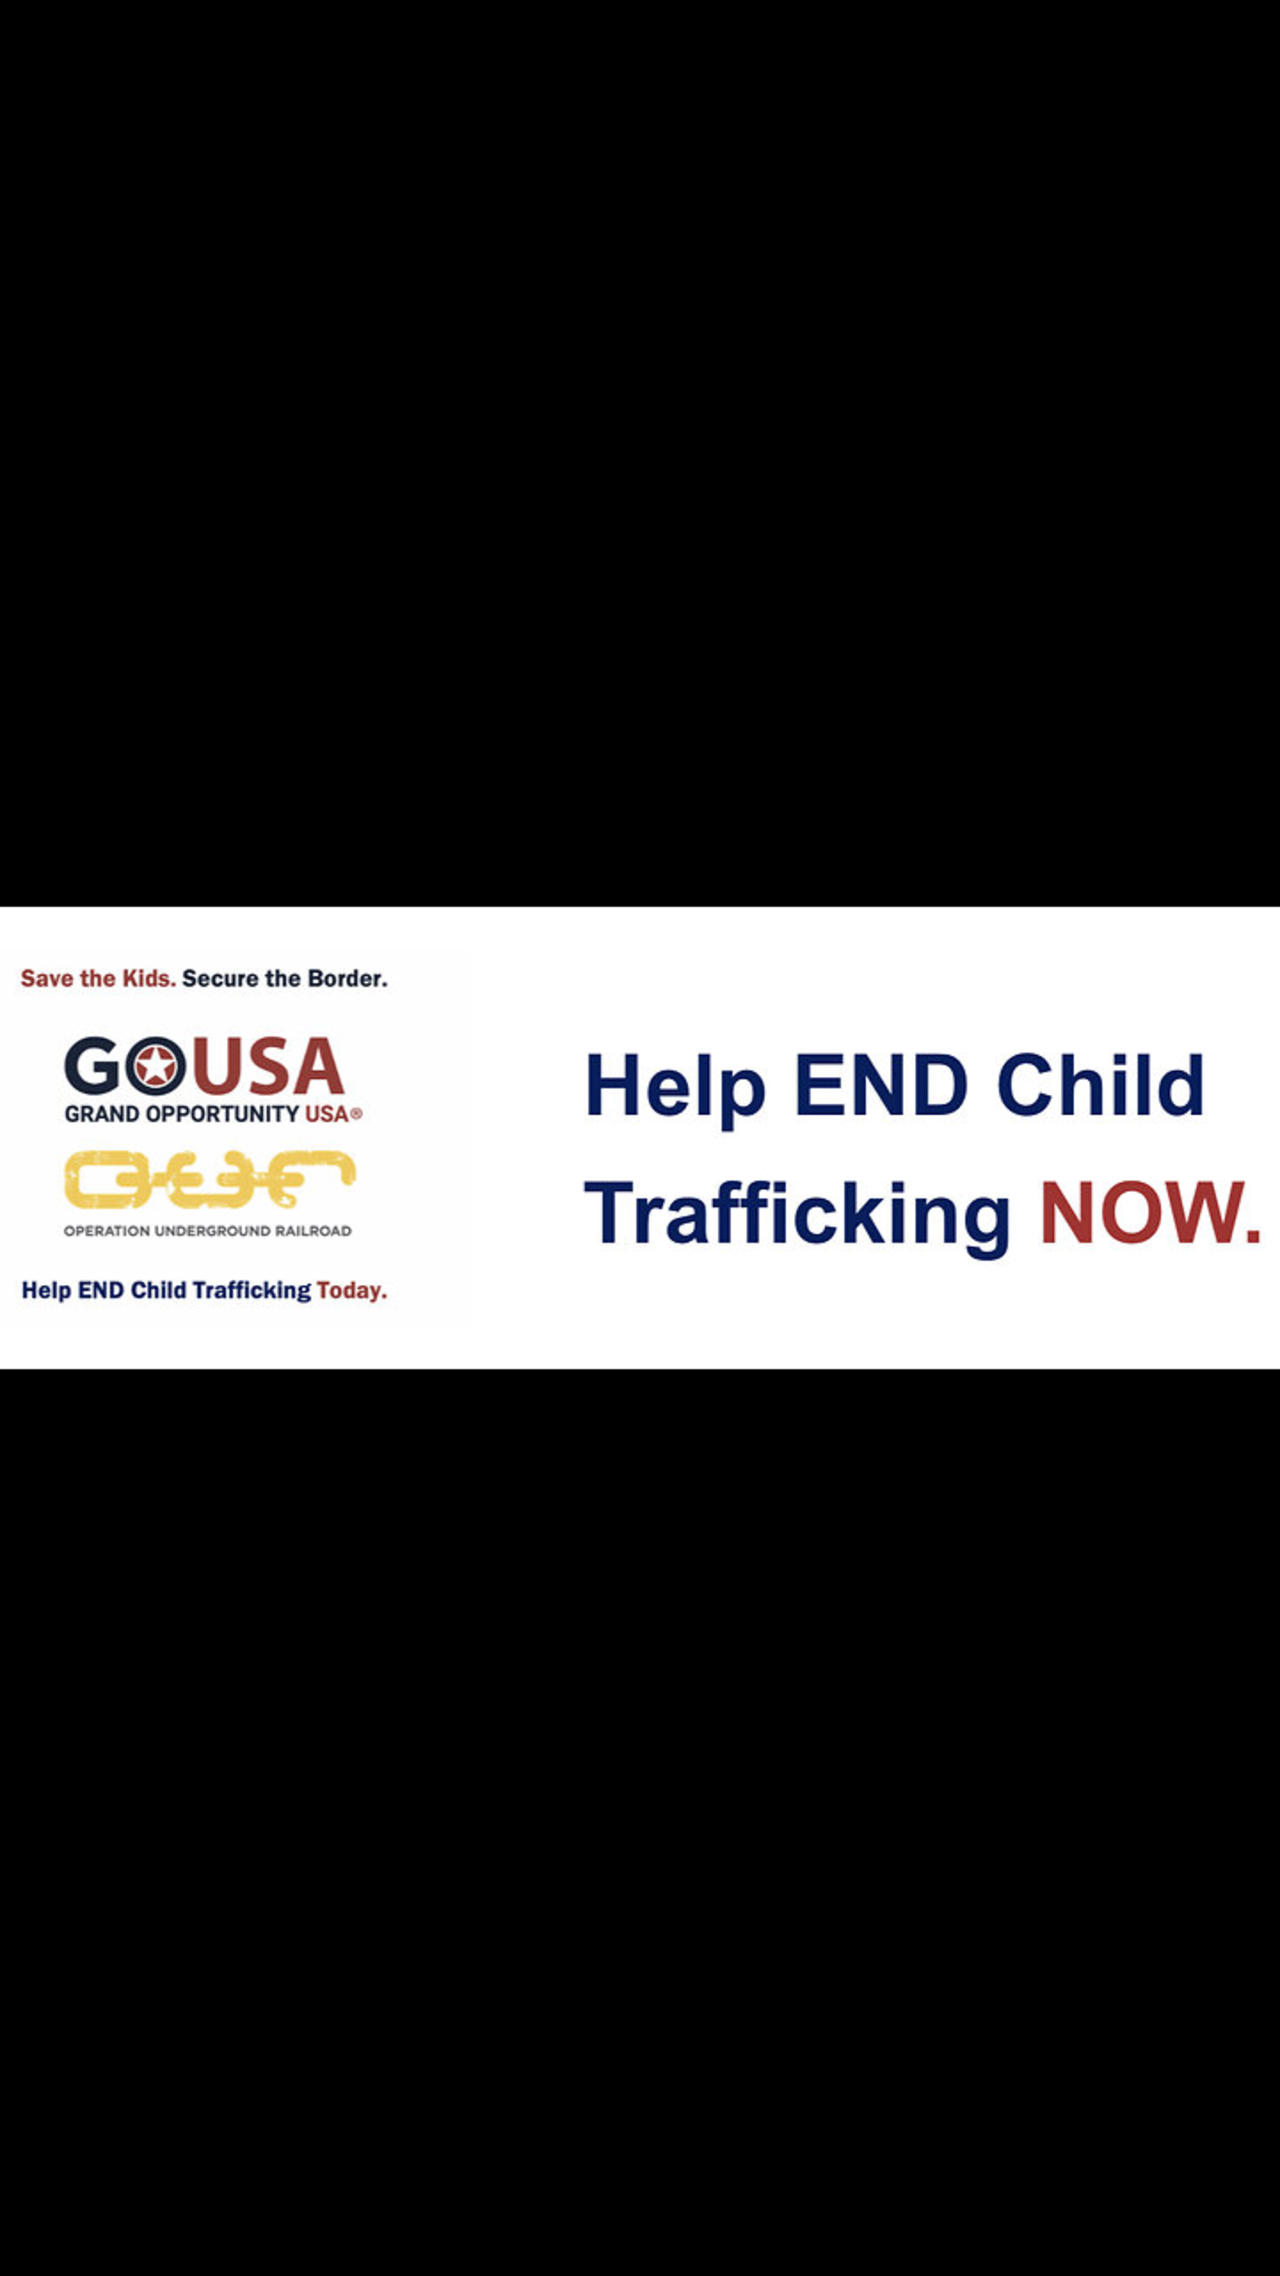 GOUSA's "THEM vs YOU" Show: "Save the Kids. Secure the Border" Livestream Event